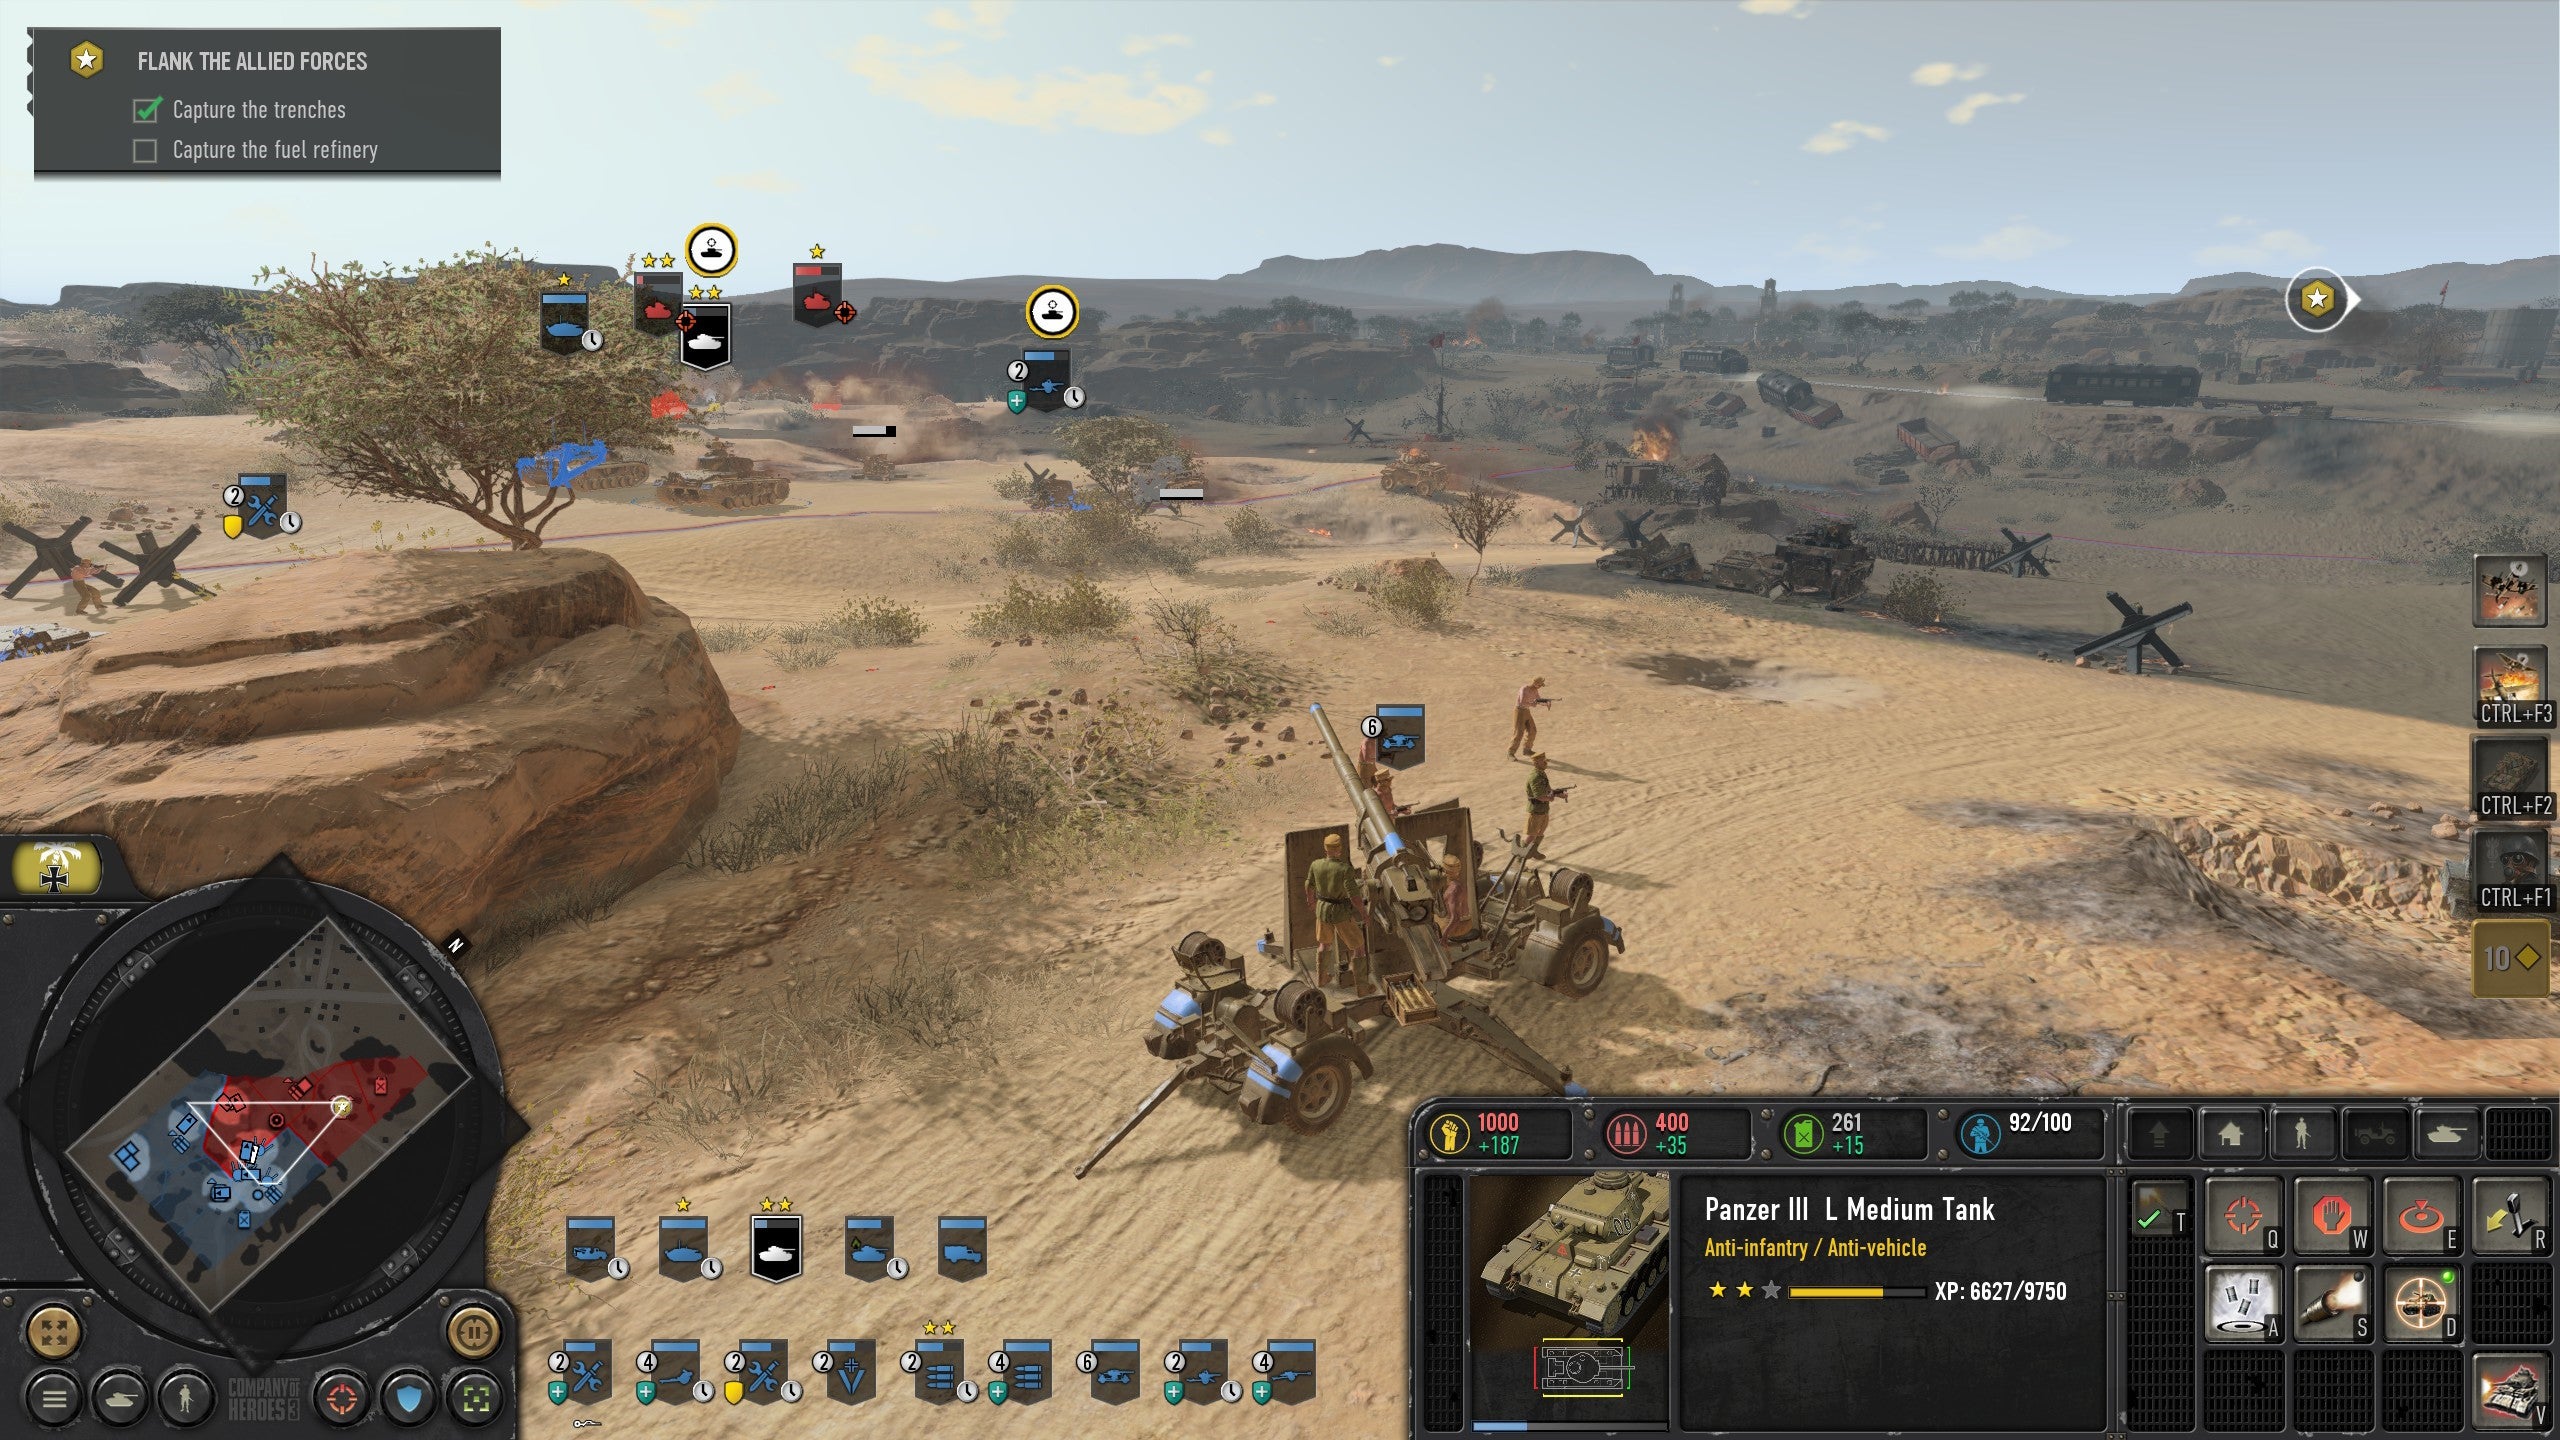 An artillery gun prepares to fire across the desert in Company Of Heroes 3